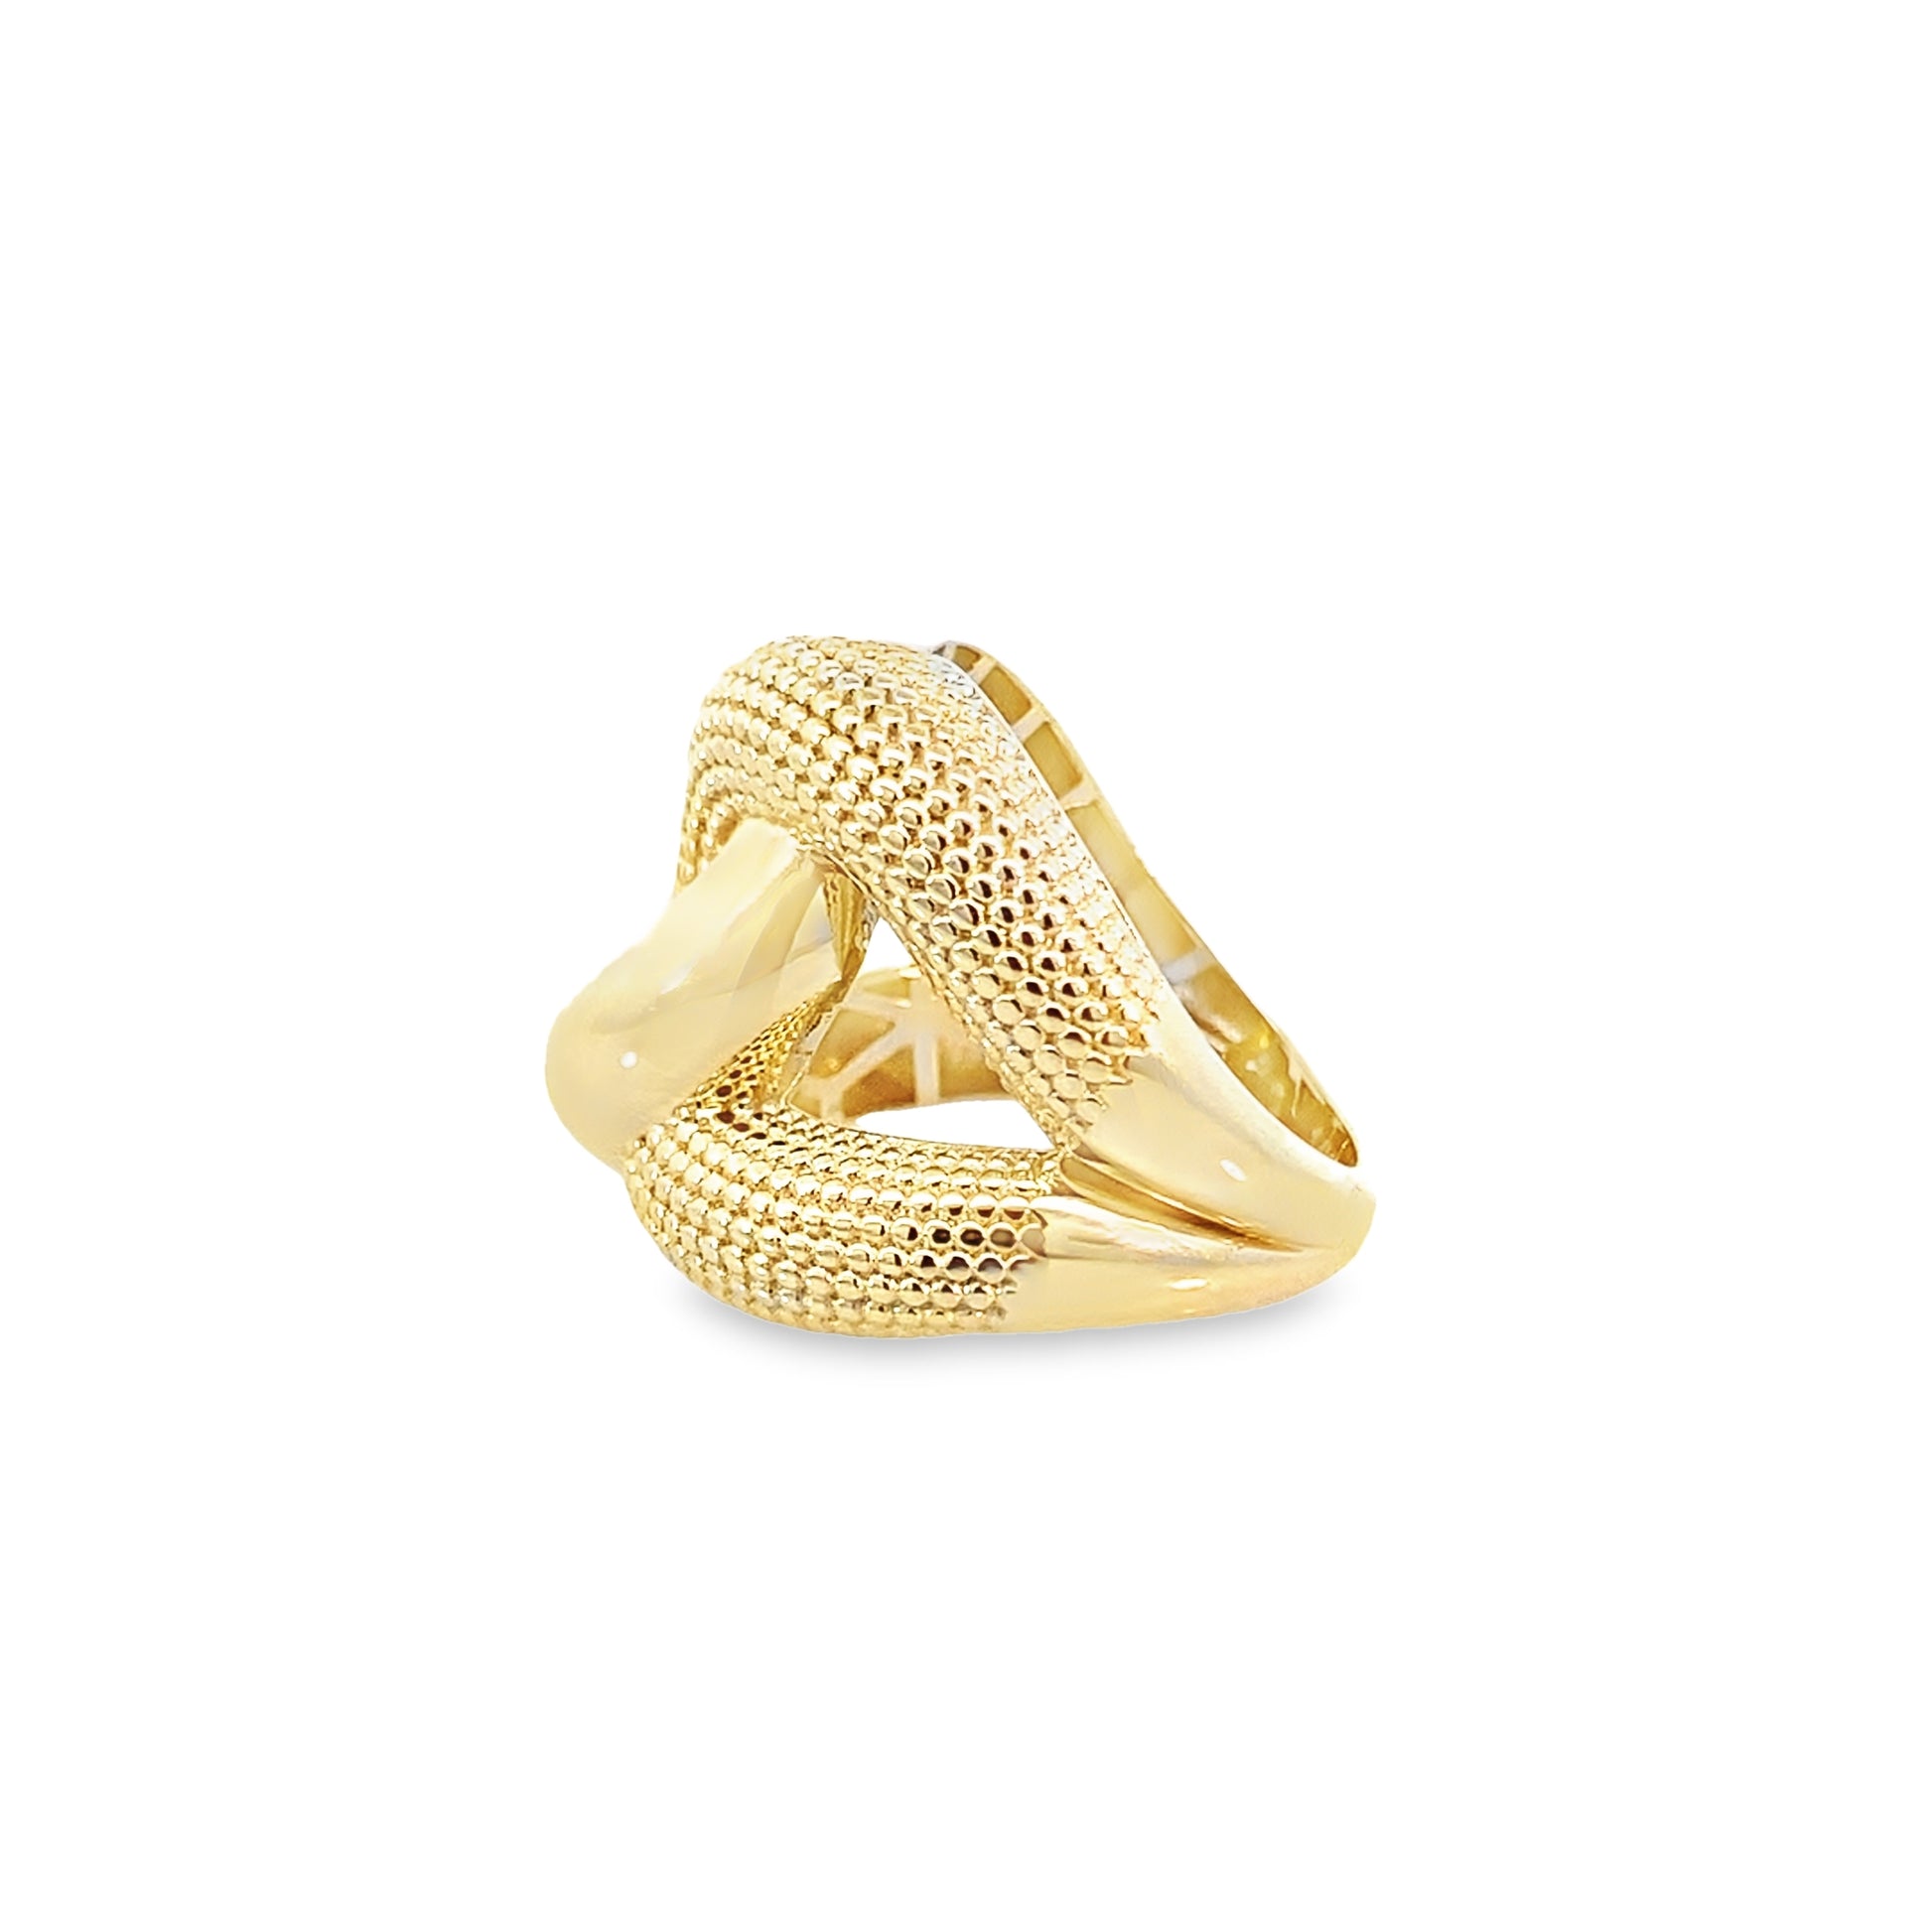 14K Yellow Gold Ladies Fancy Ring Size 7 2.9Dwt